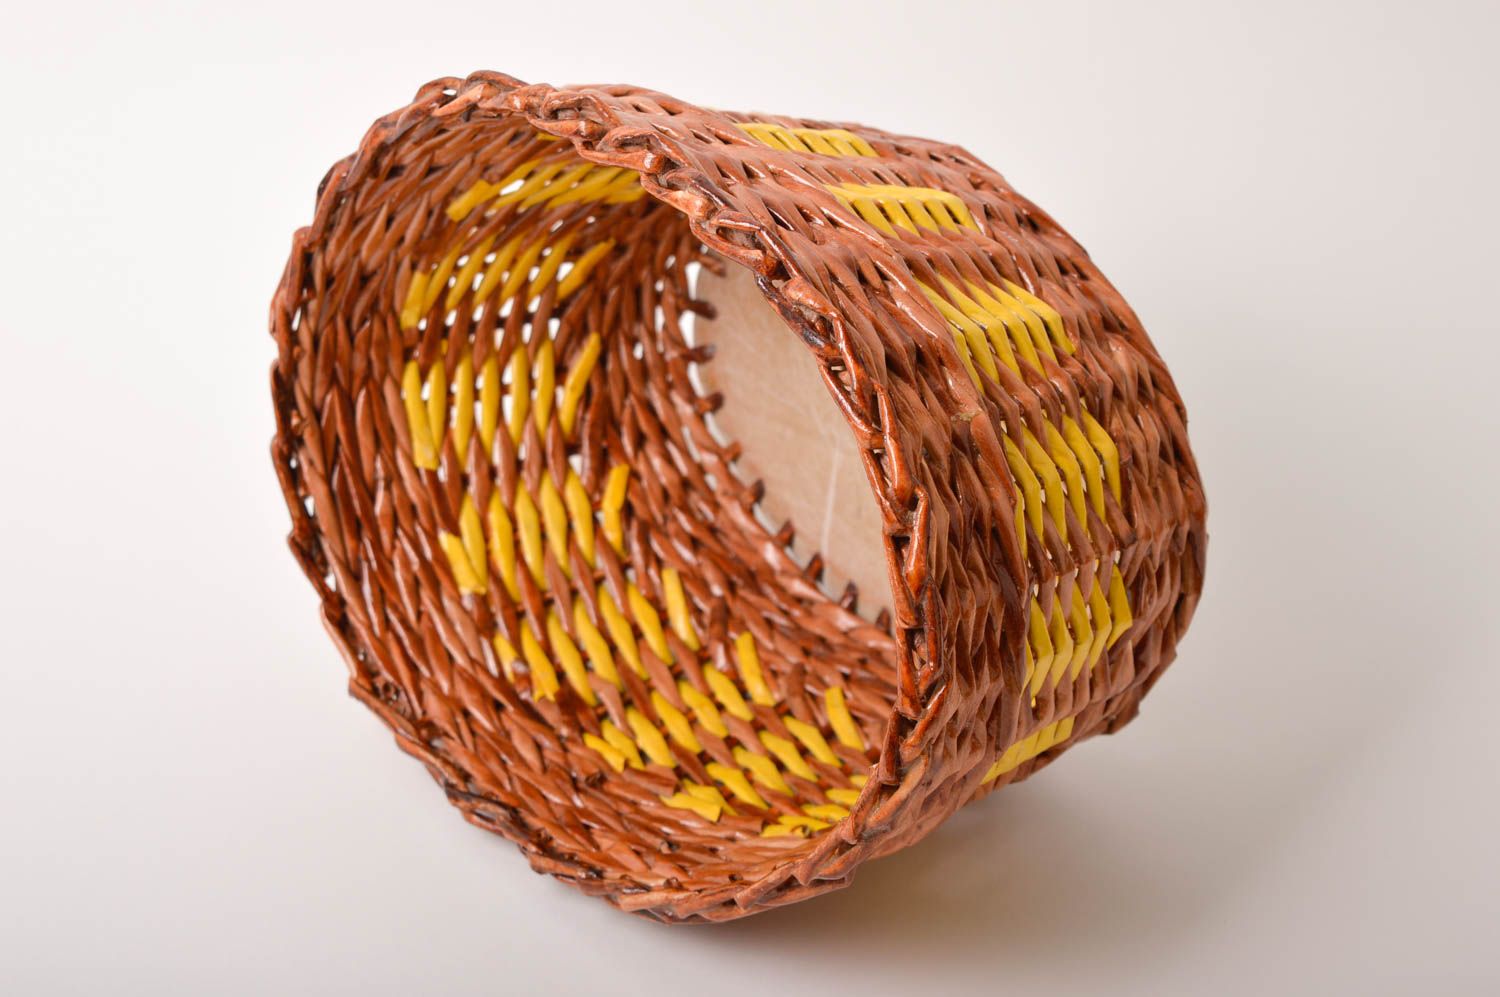 Handmade wicker basket home decor elegant accessories home organizer ideas photo 5